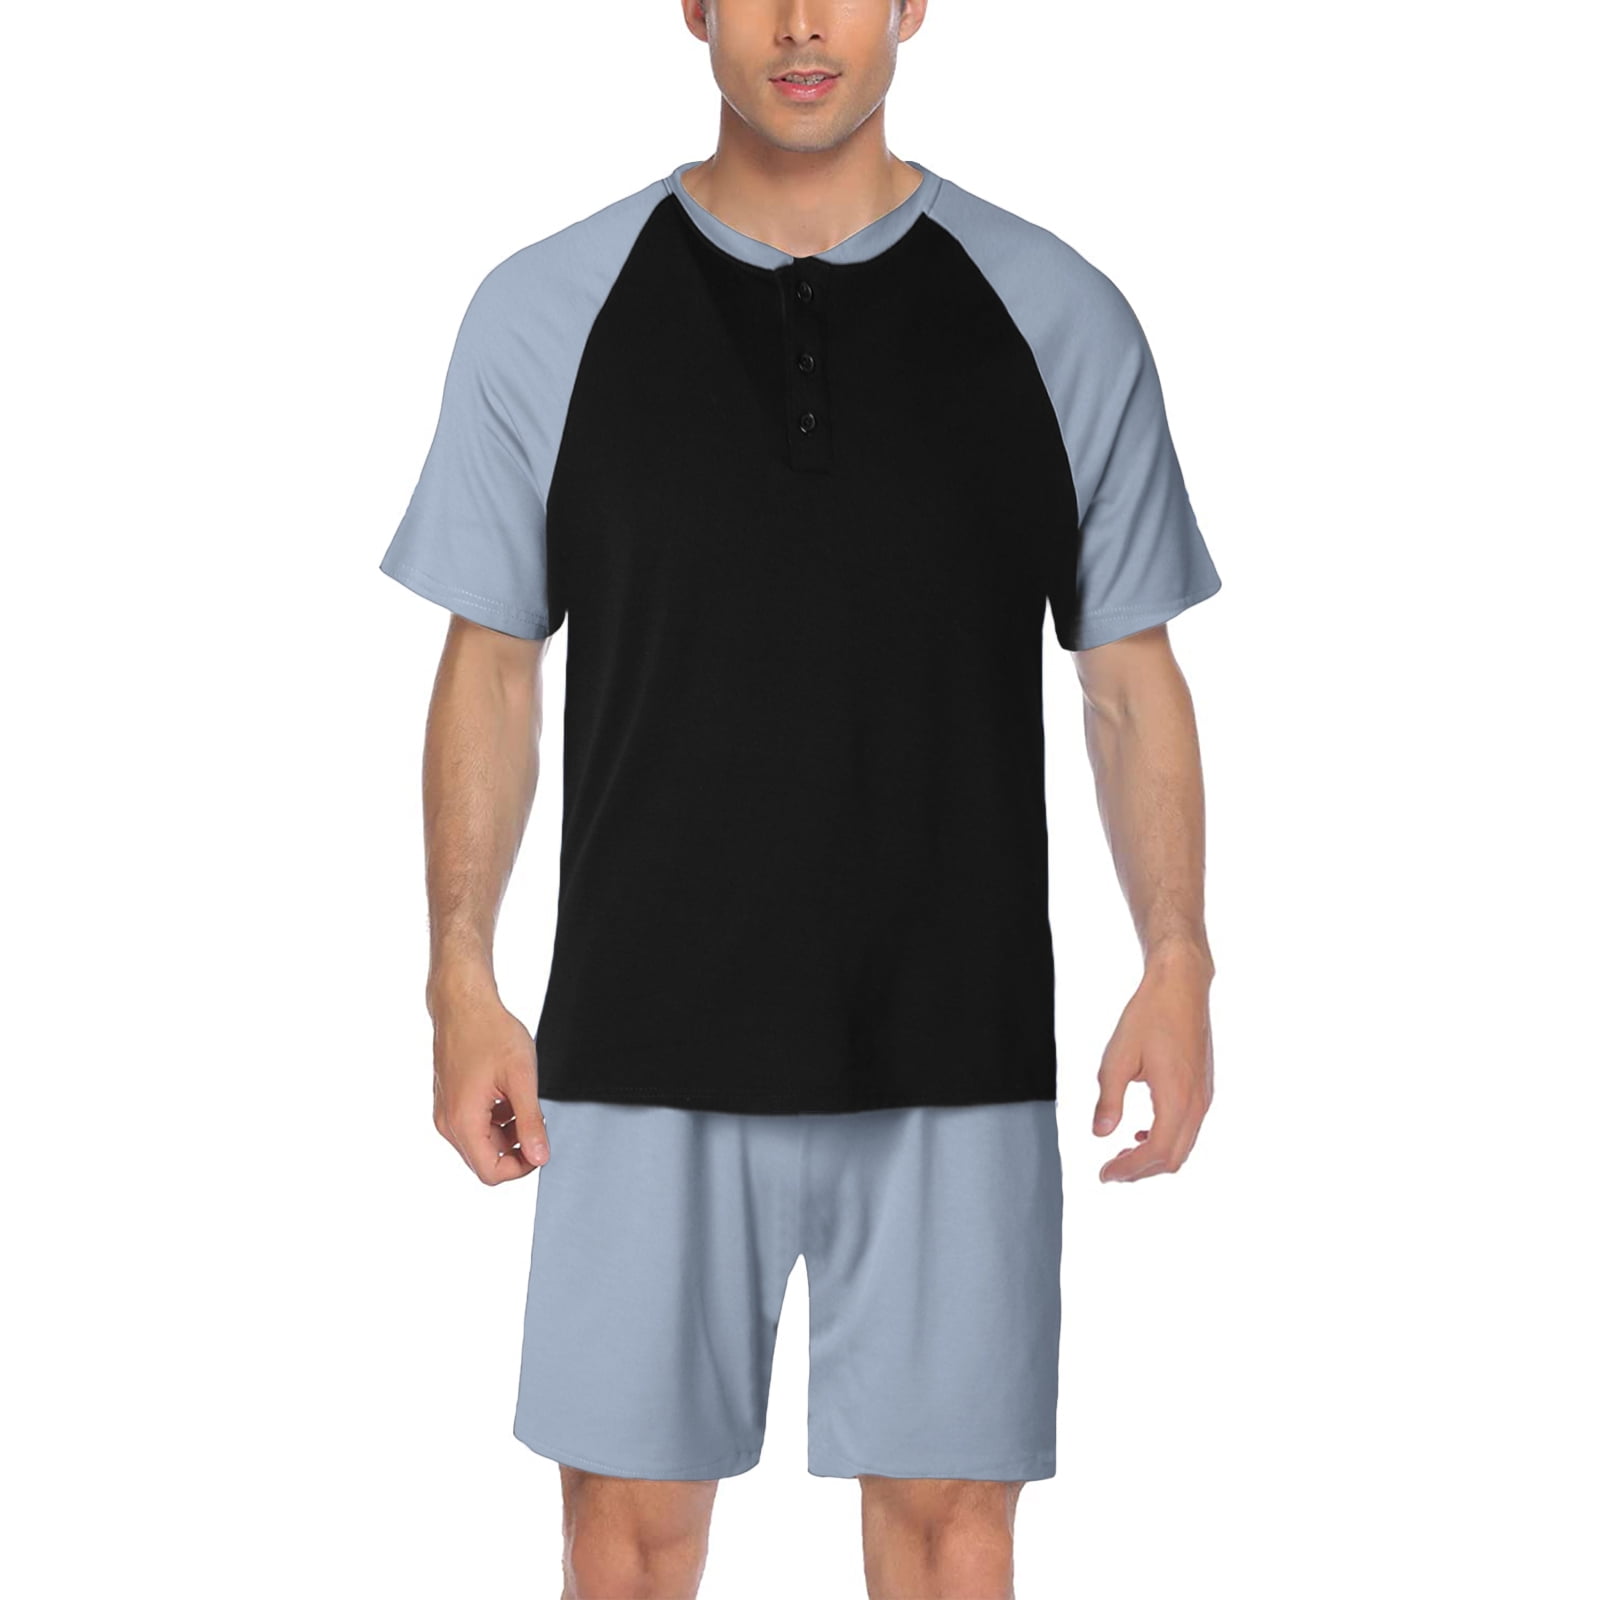 Sunisery Men 's Summer Pajamas Sets Contrast Color Short Sleepwear ...